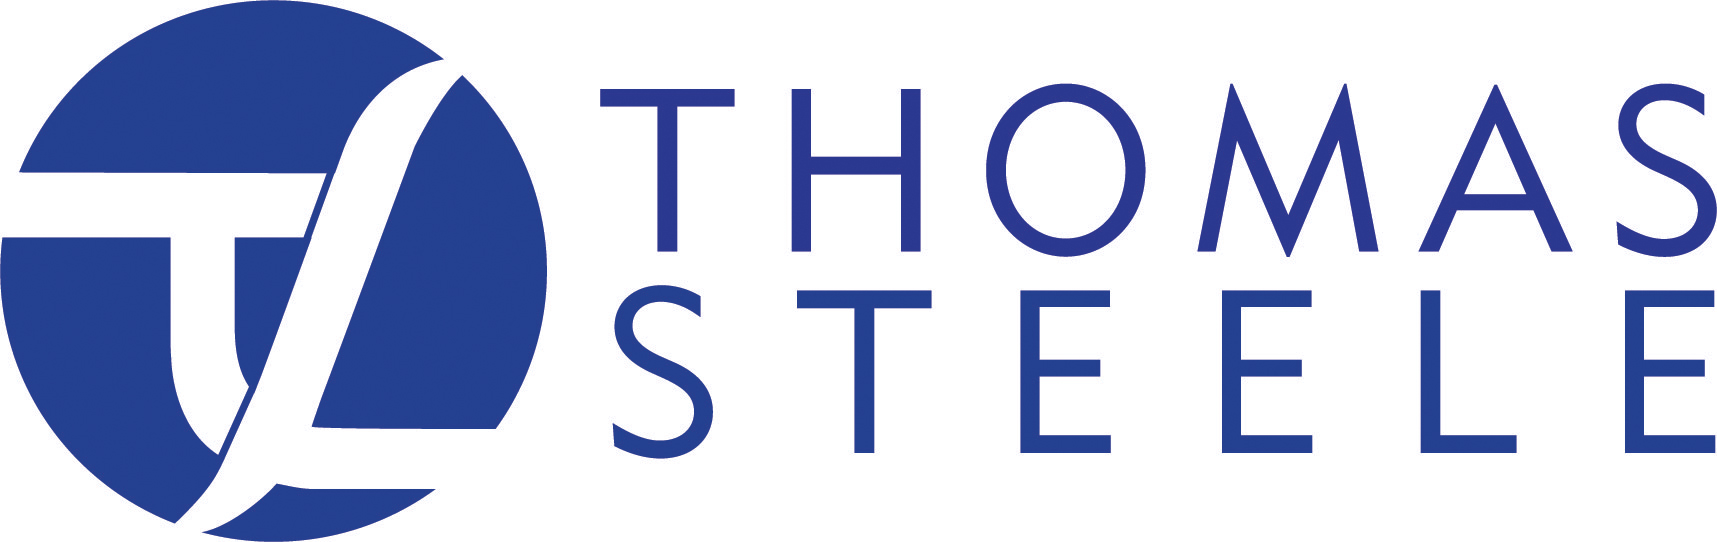 Image result for Thomas steele logo